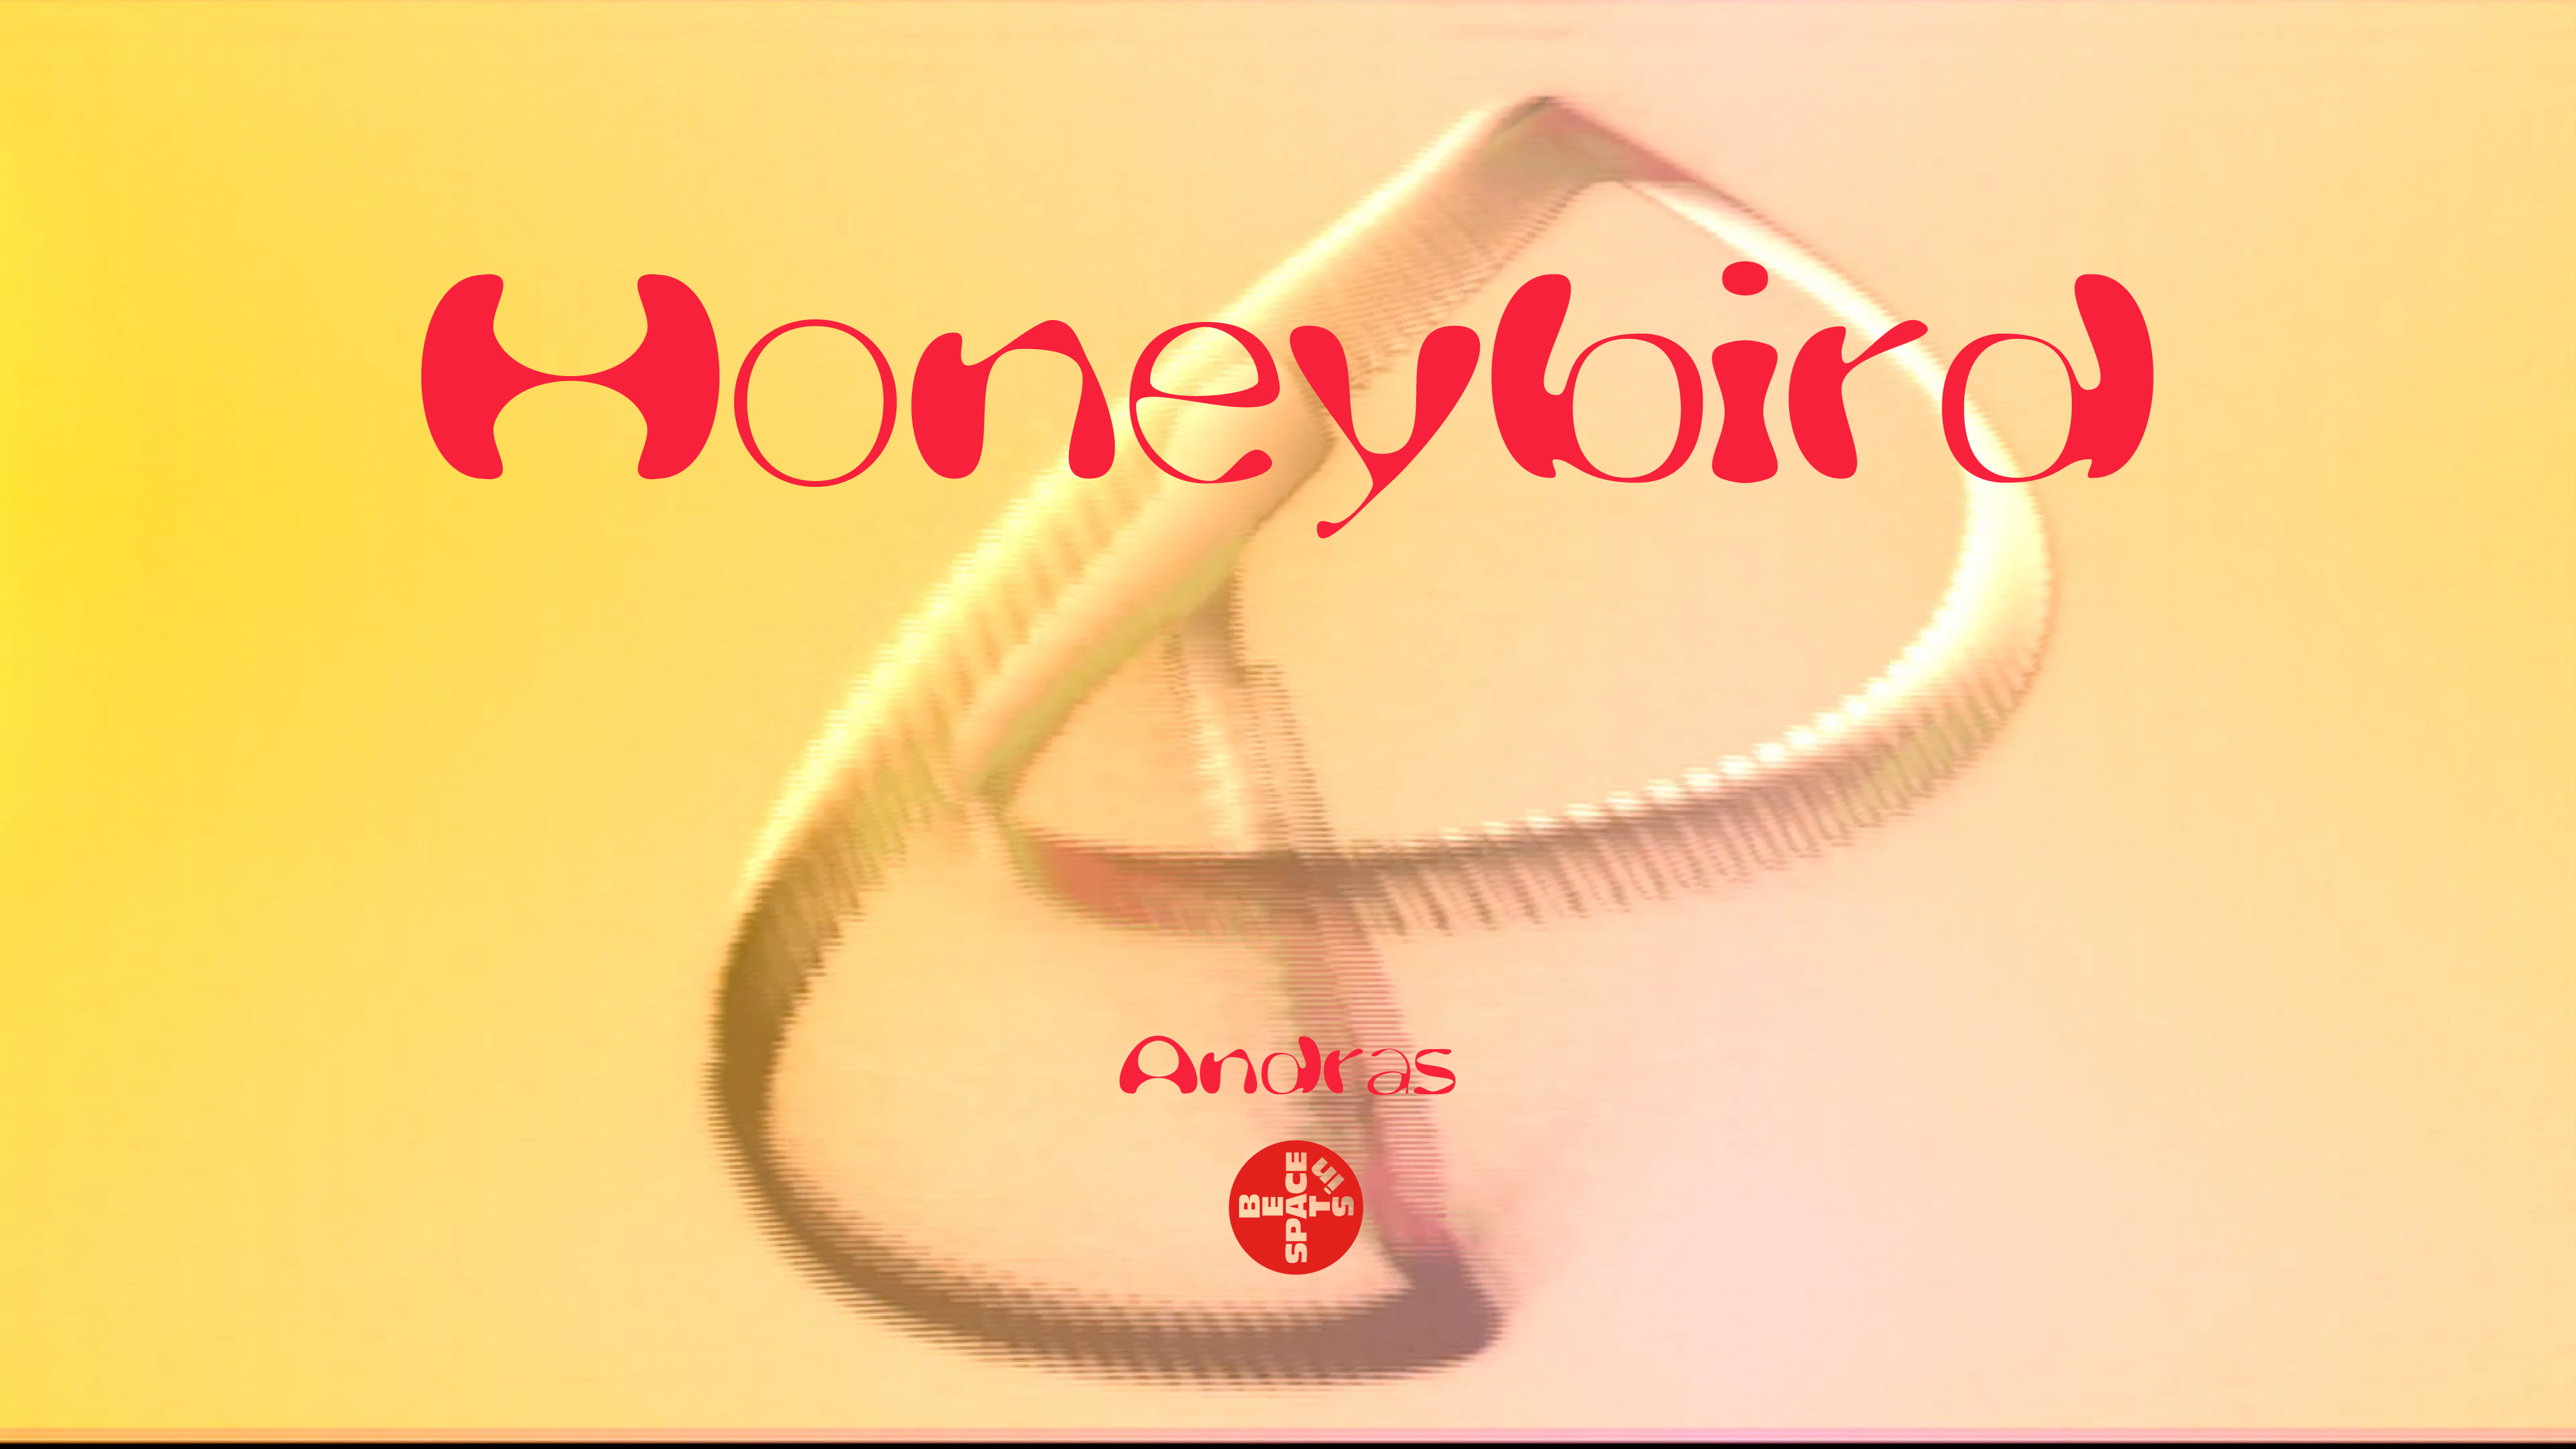 Link to Video for Andras – Honeybird